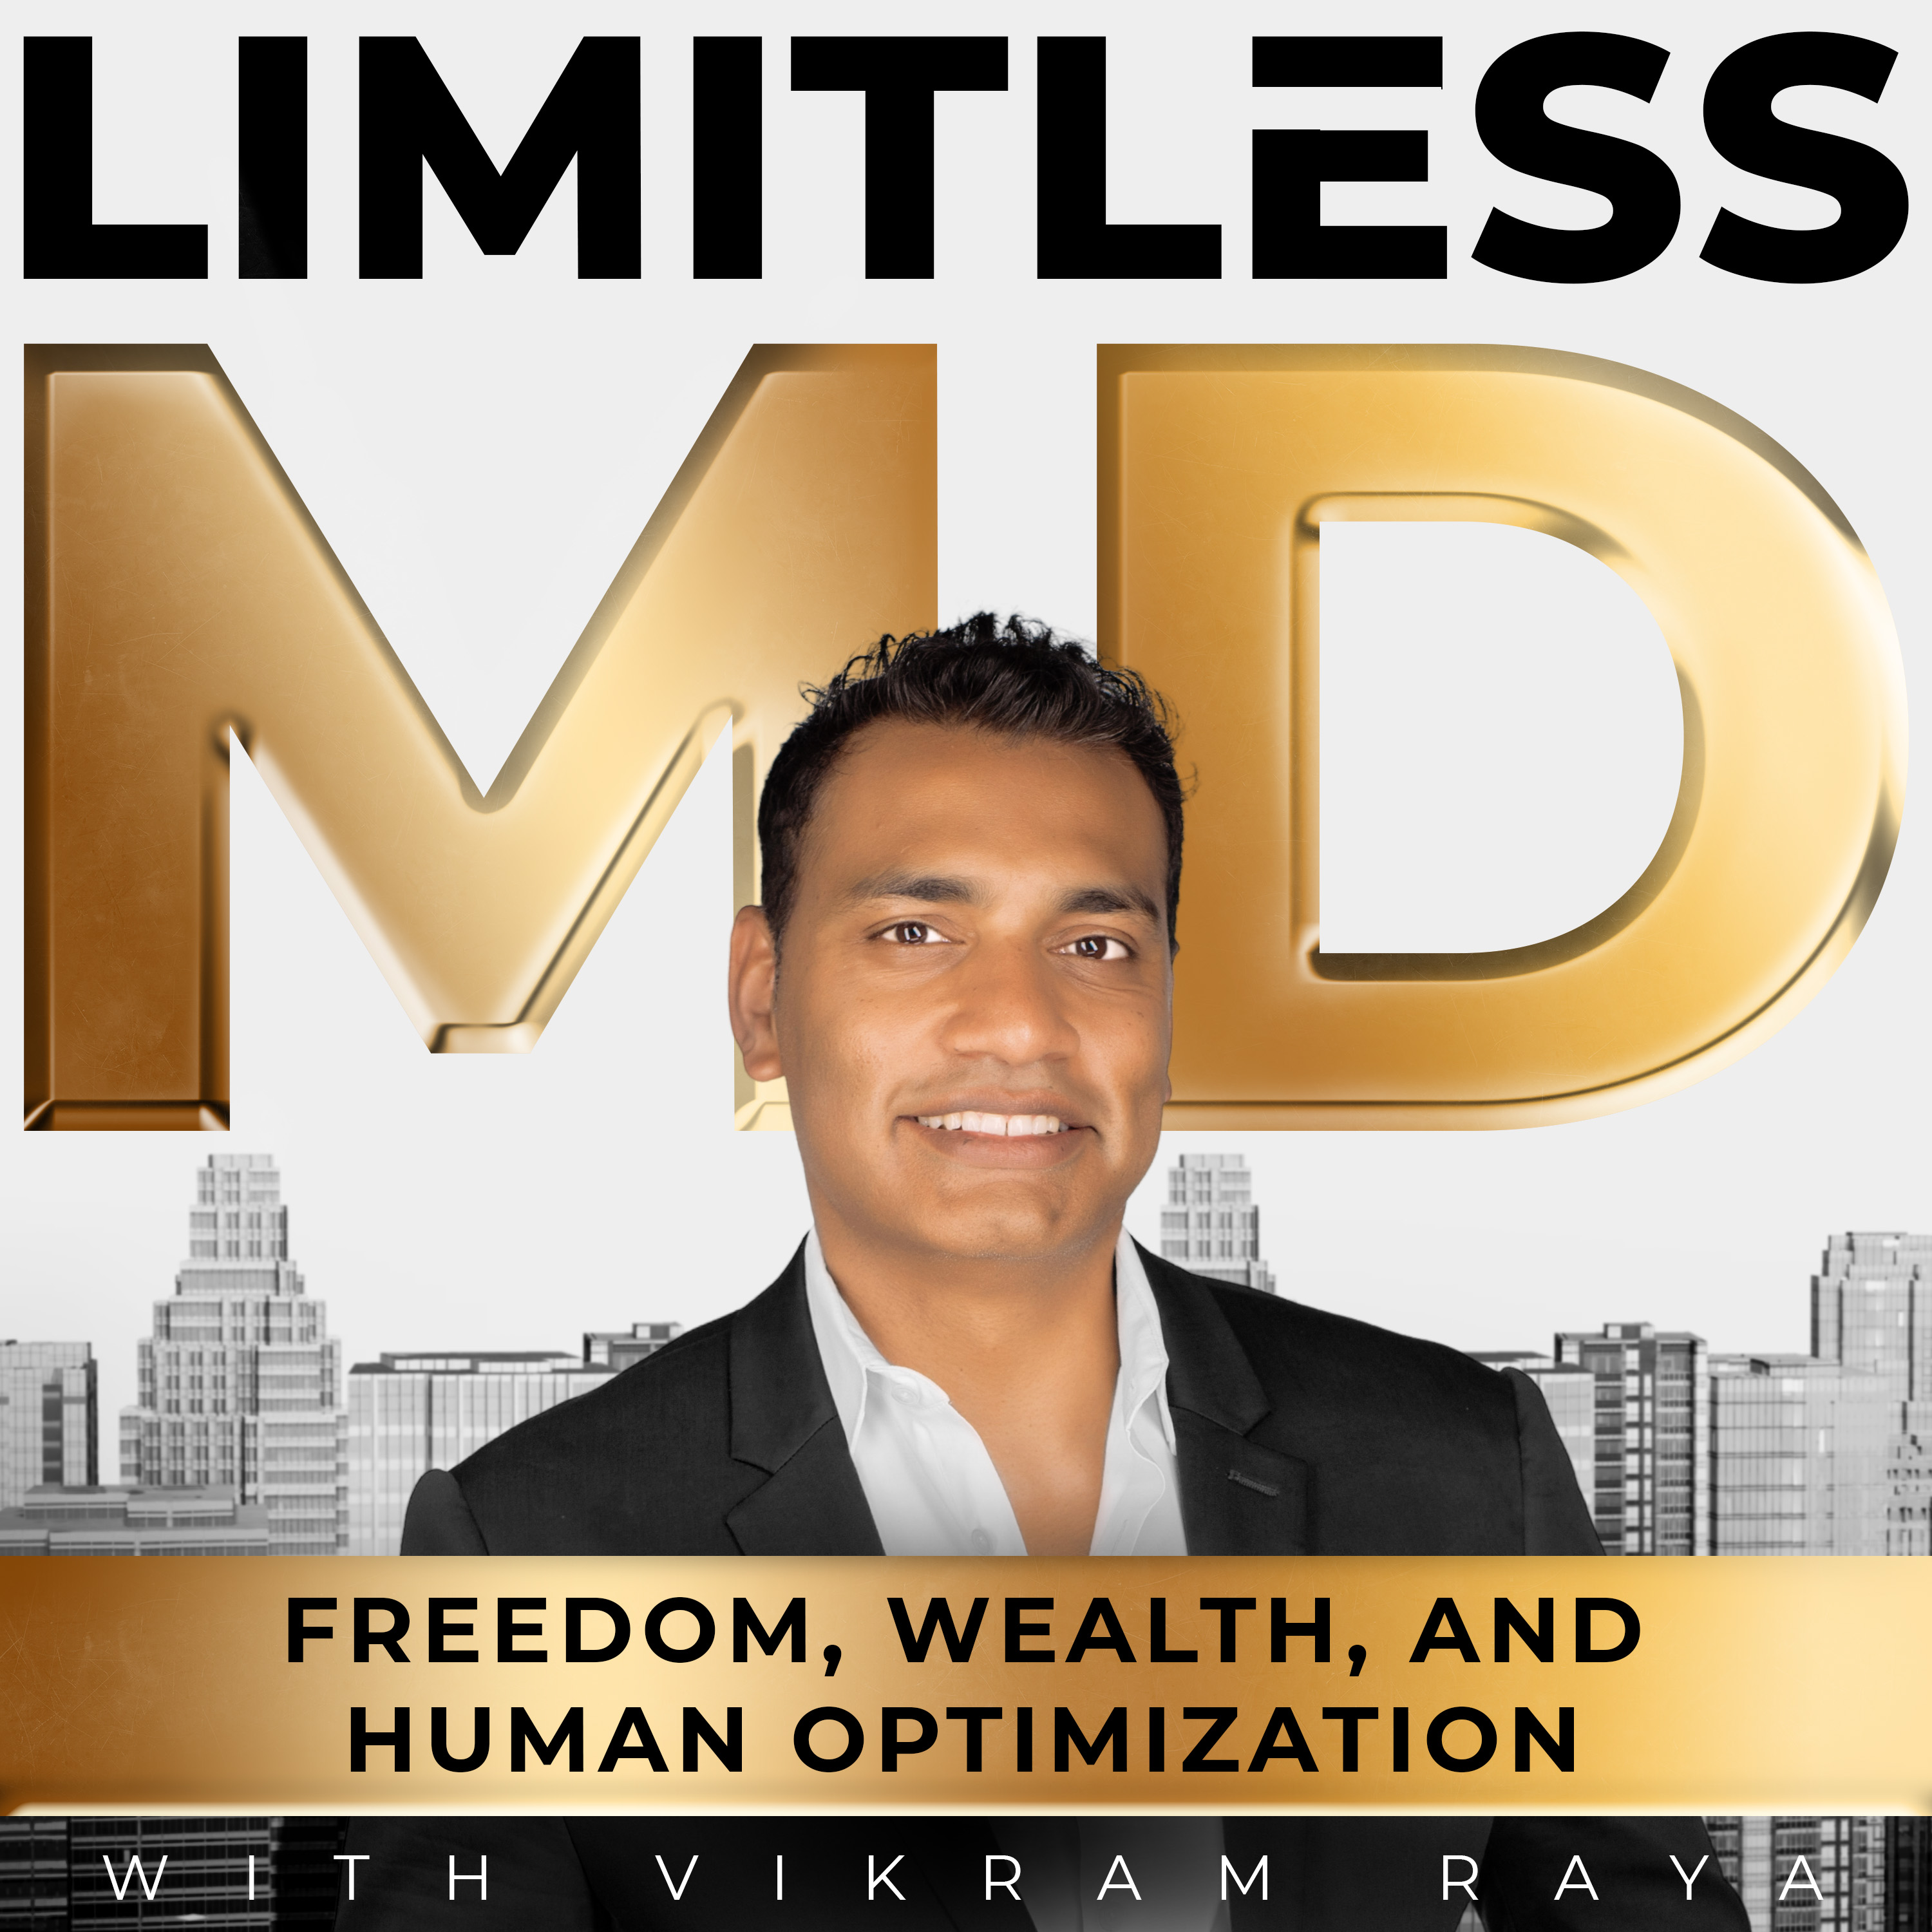 The Limitless MD podcast, host Vikram Raya